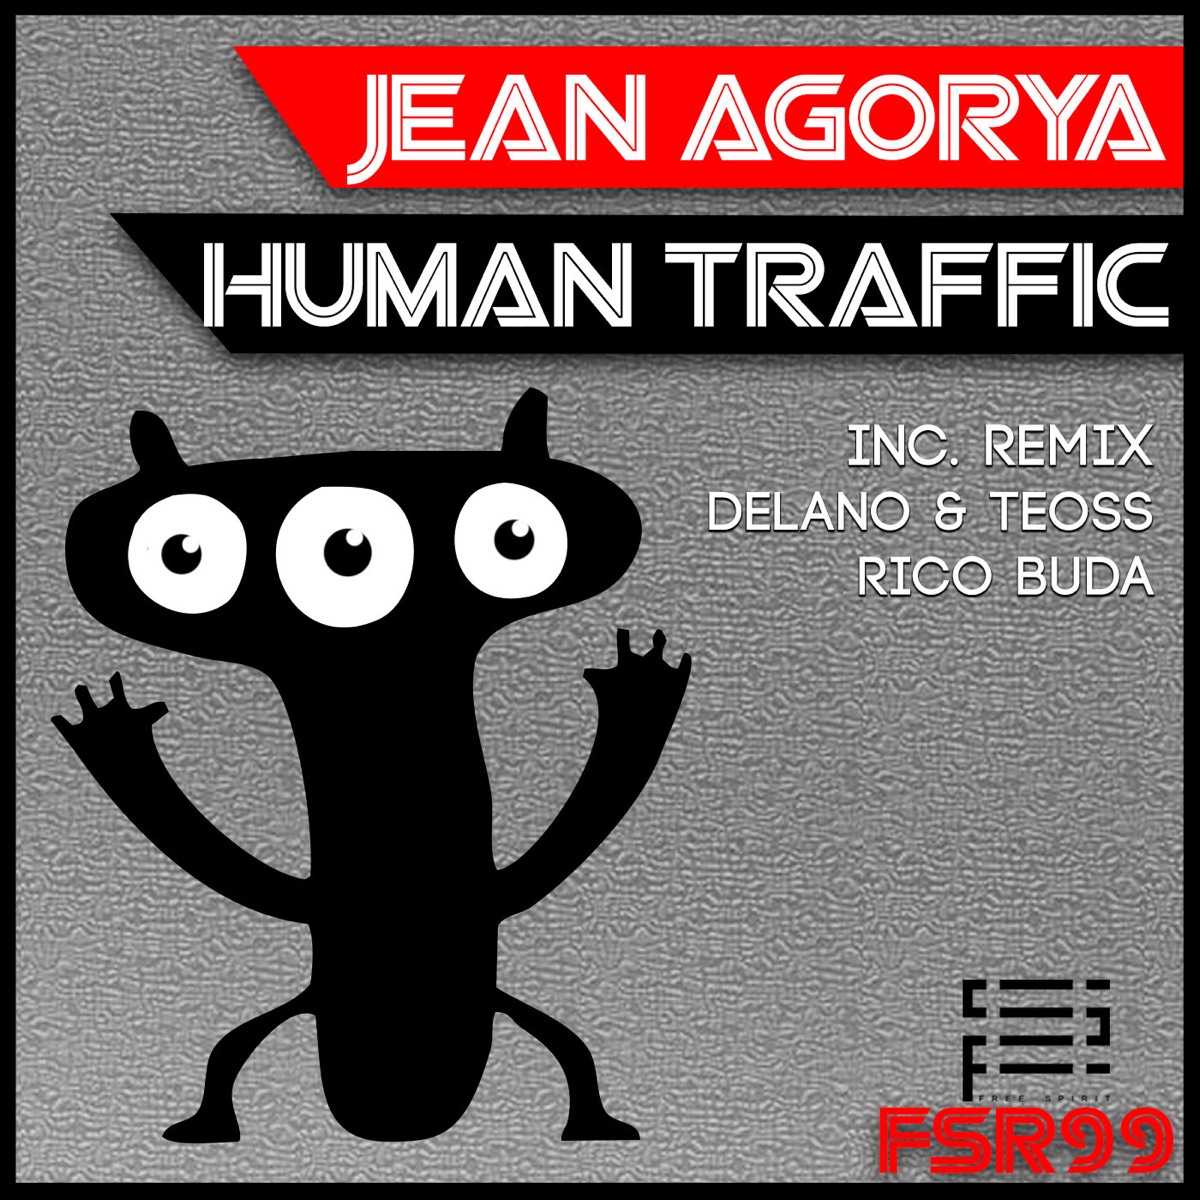 Human Traffic – Album par Jean Agorya – Apple Music